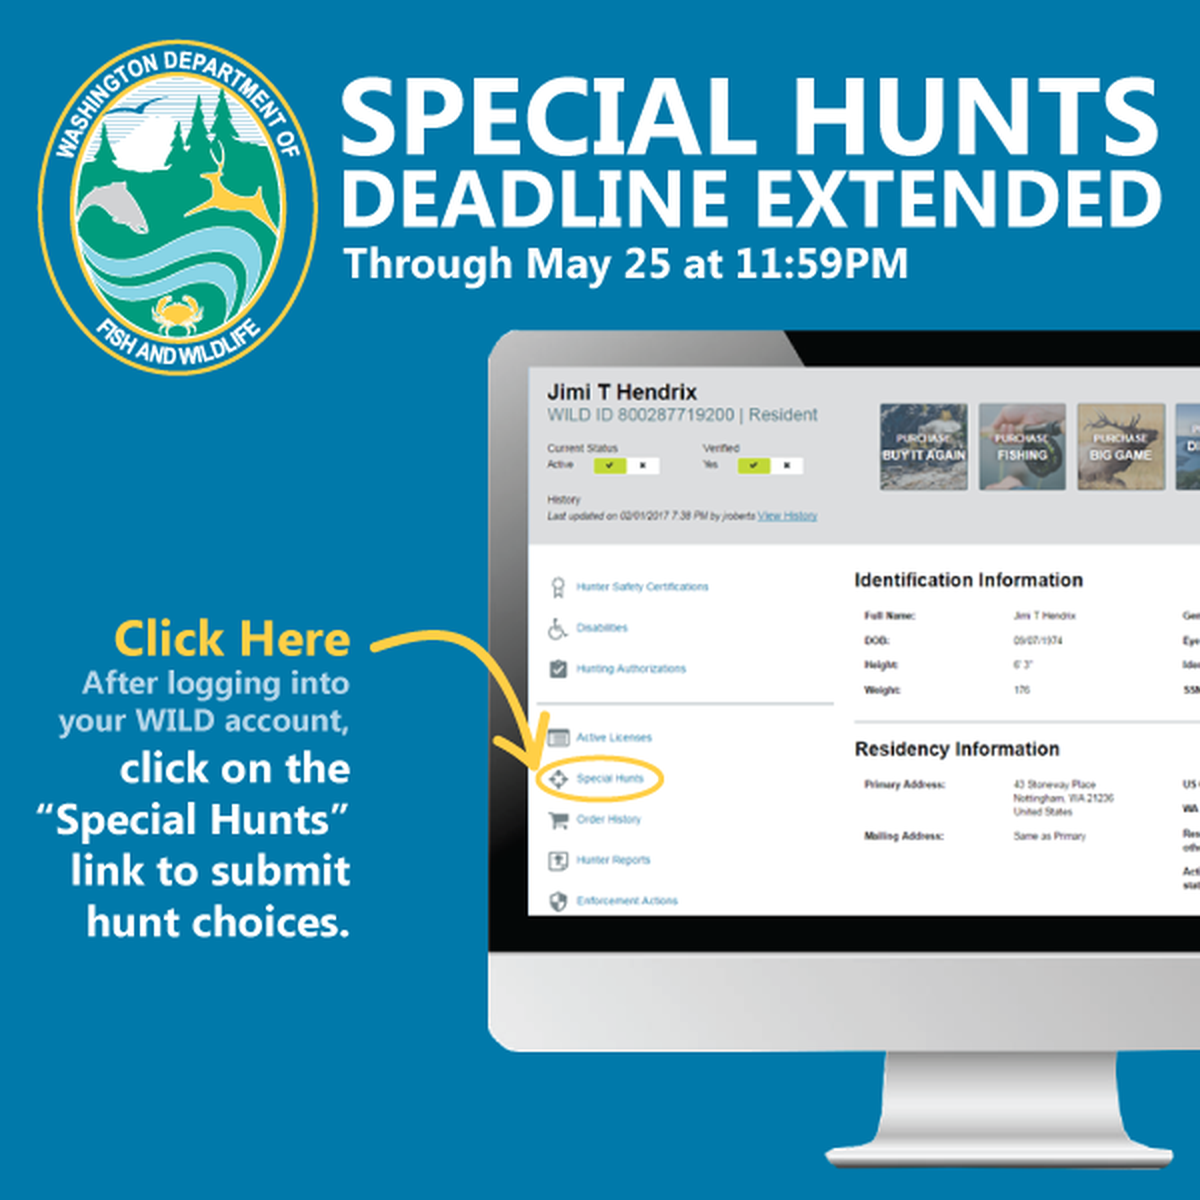 Washington special hunts application deadline extended after system